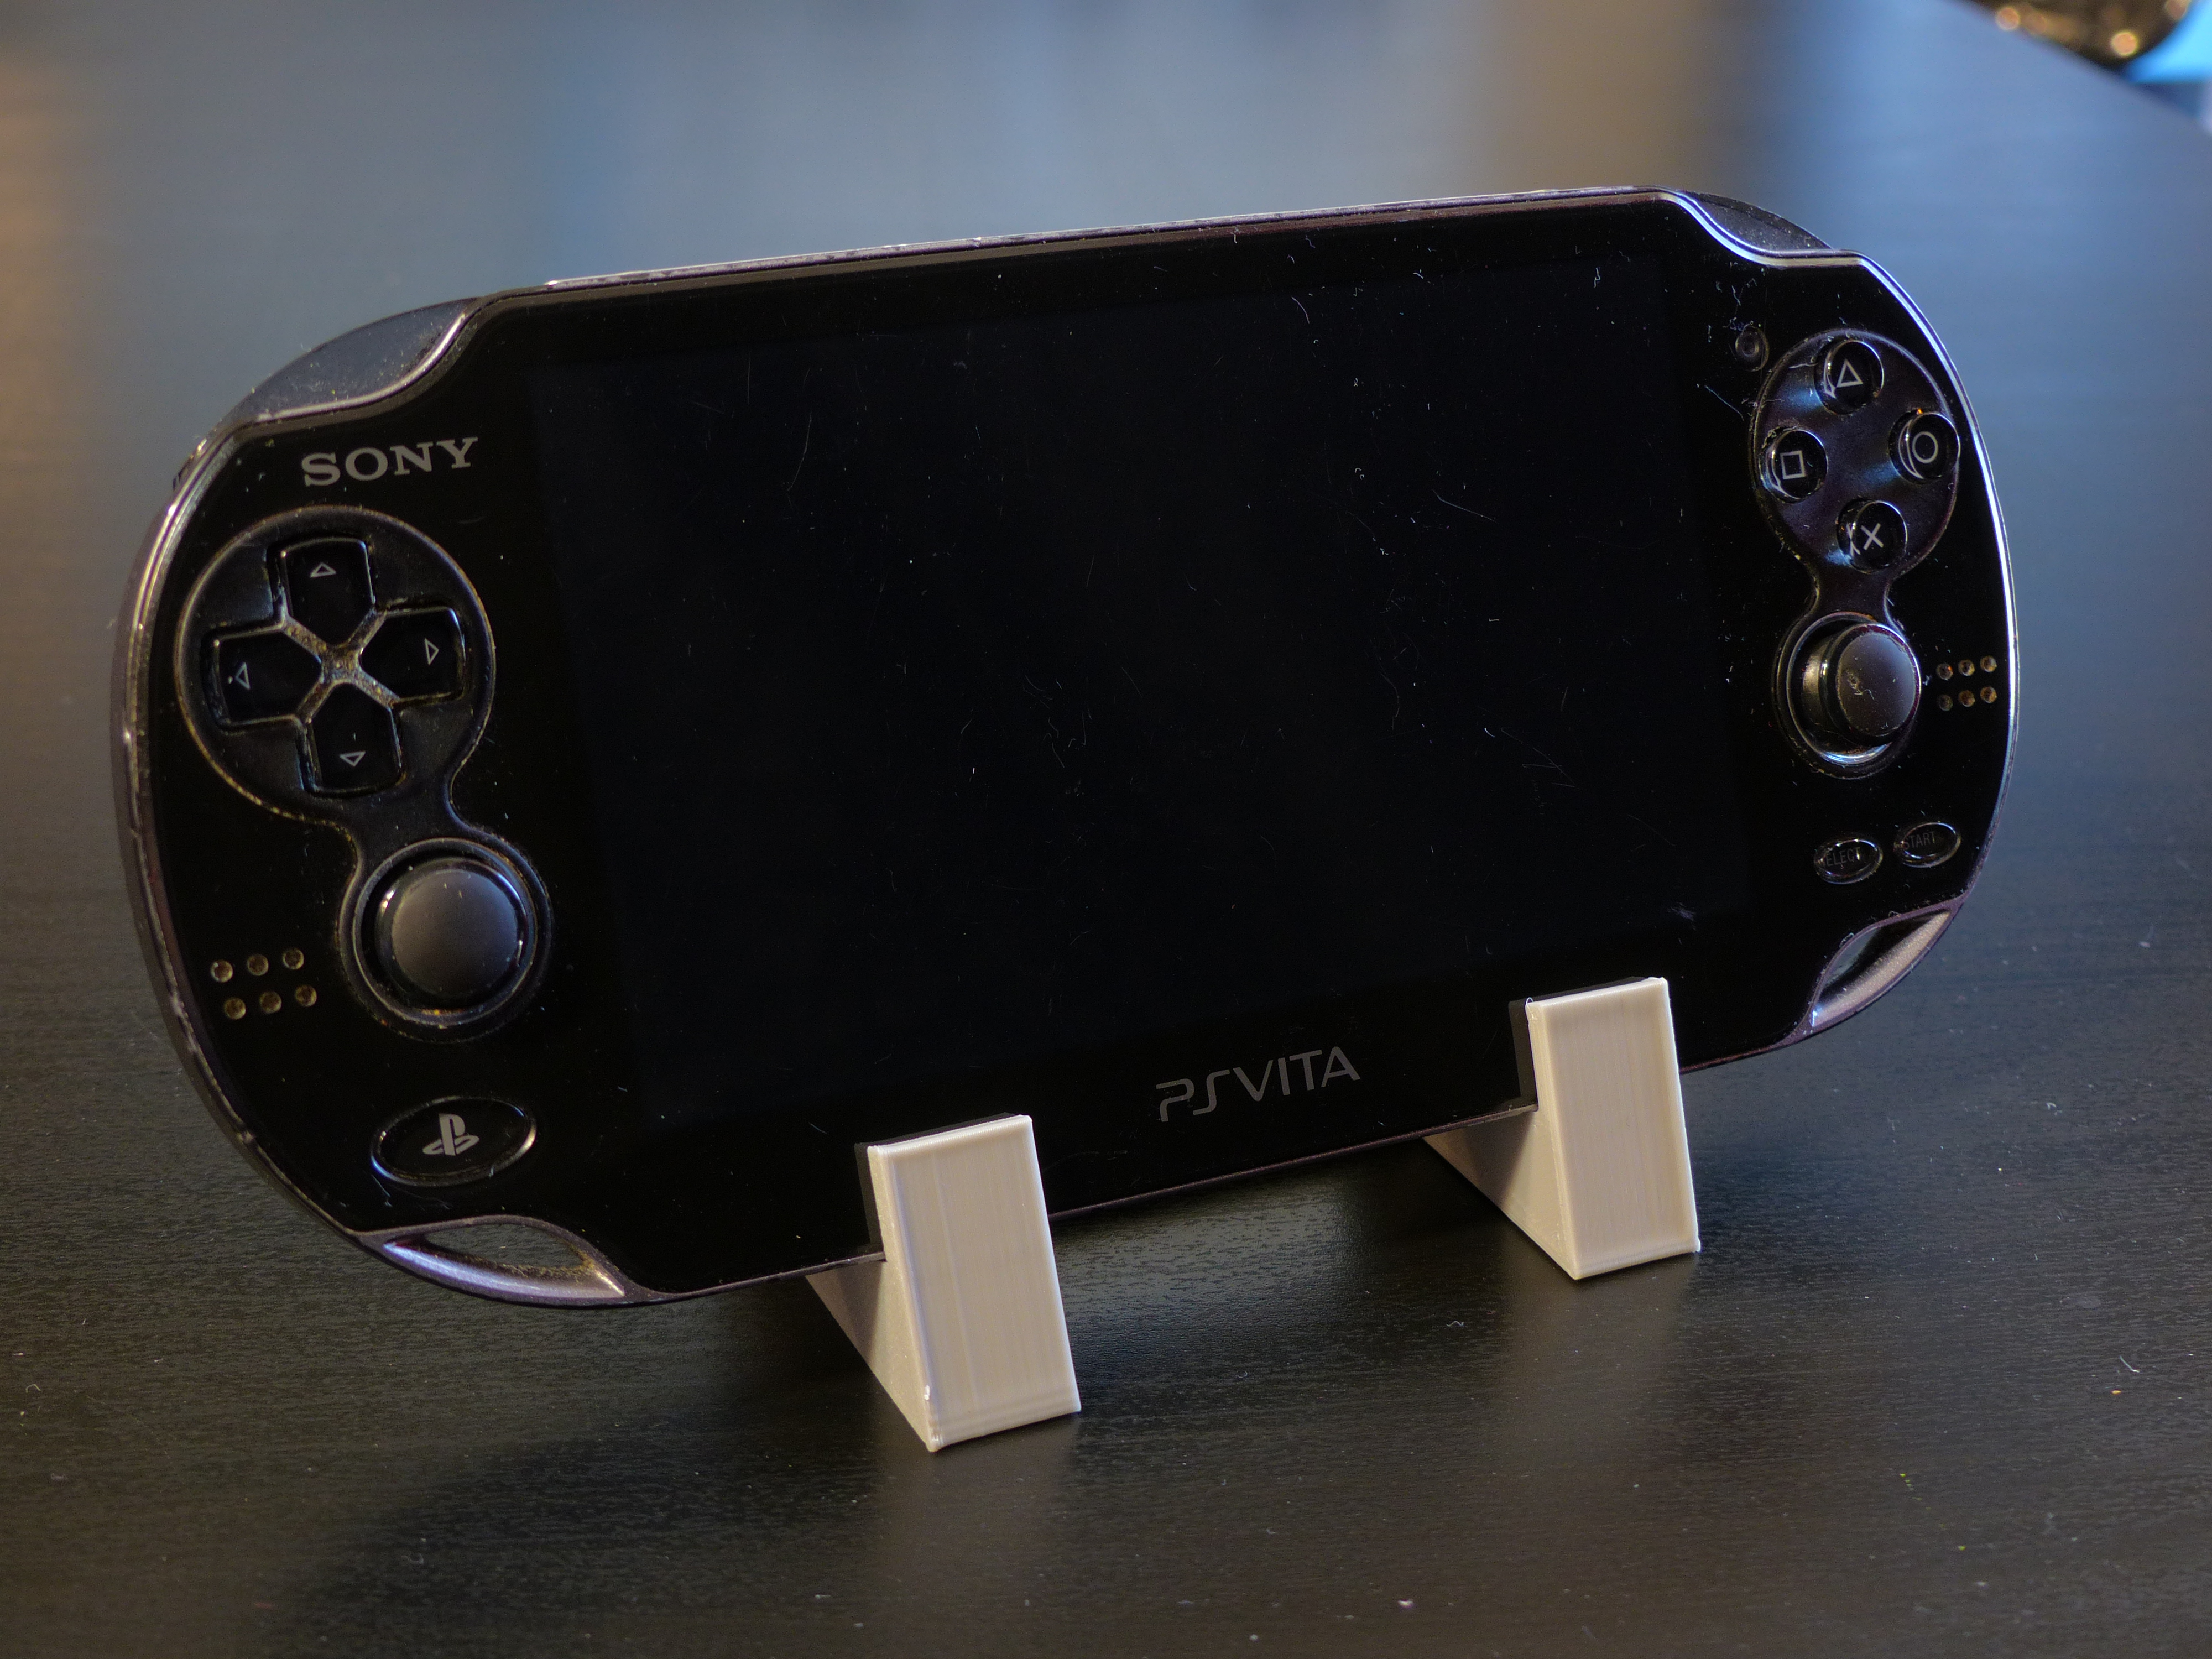 PlayStation Vita 1000 Display Stand & Kit